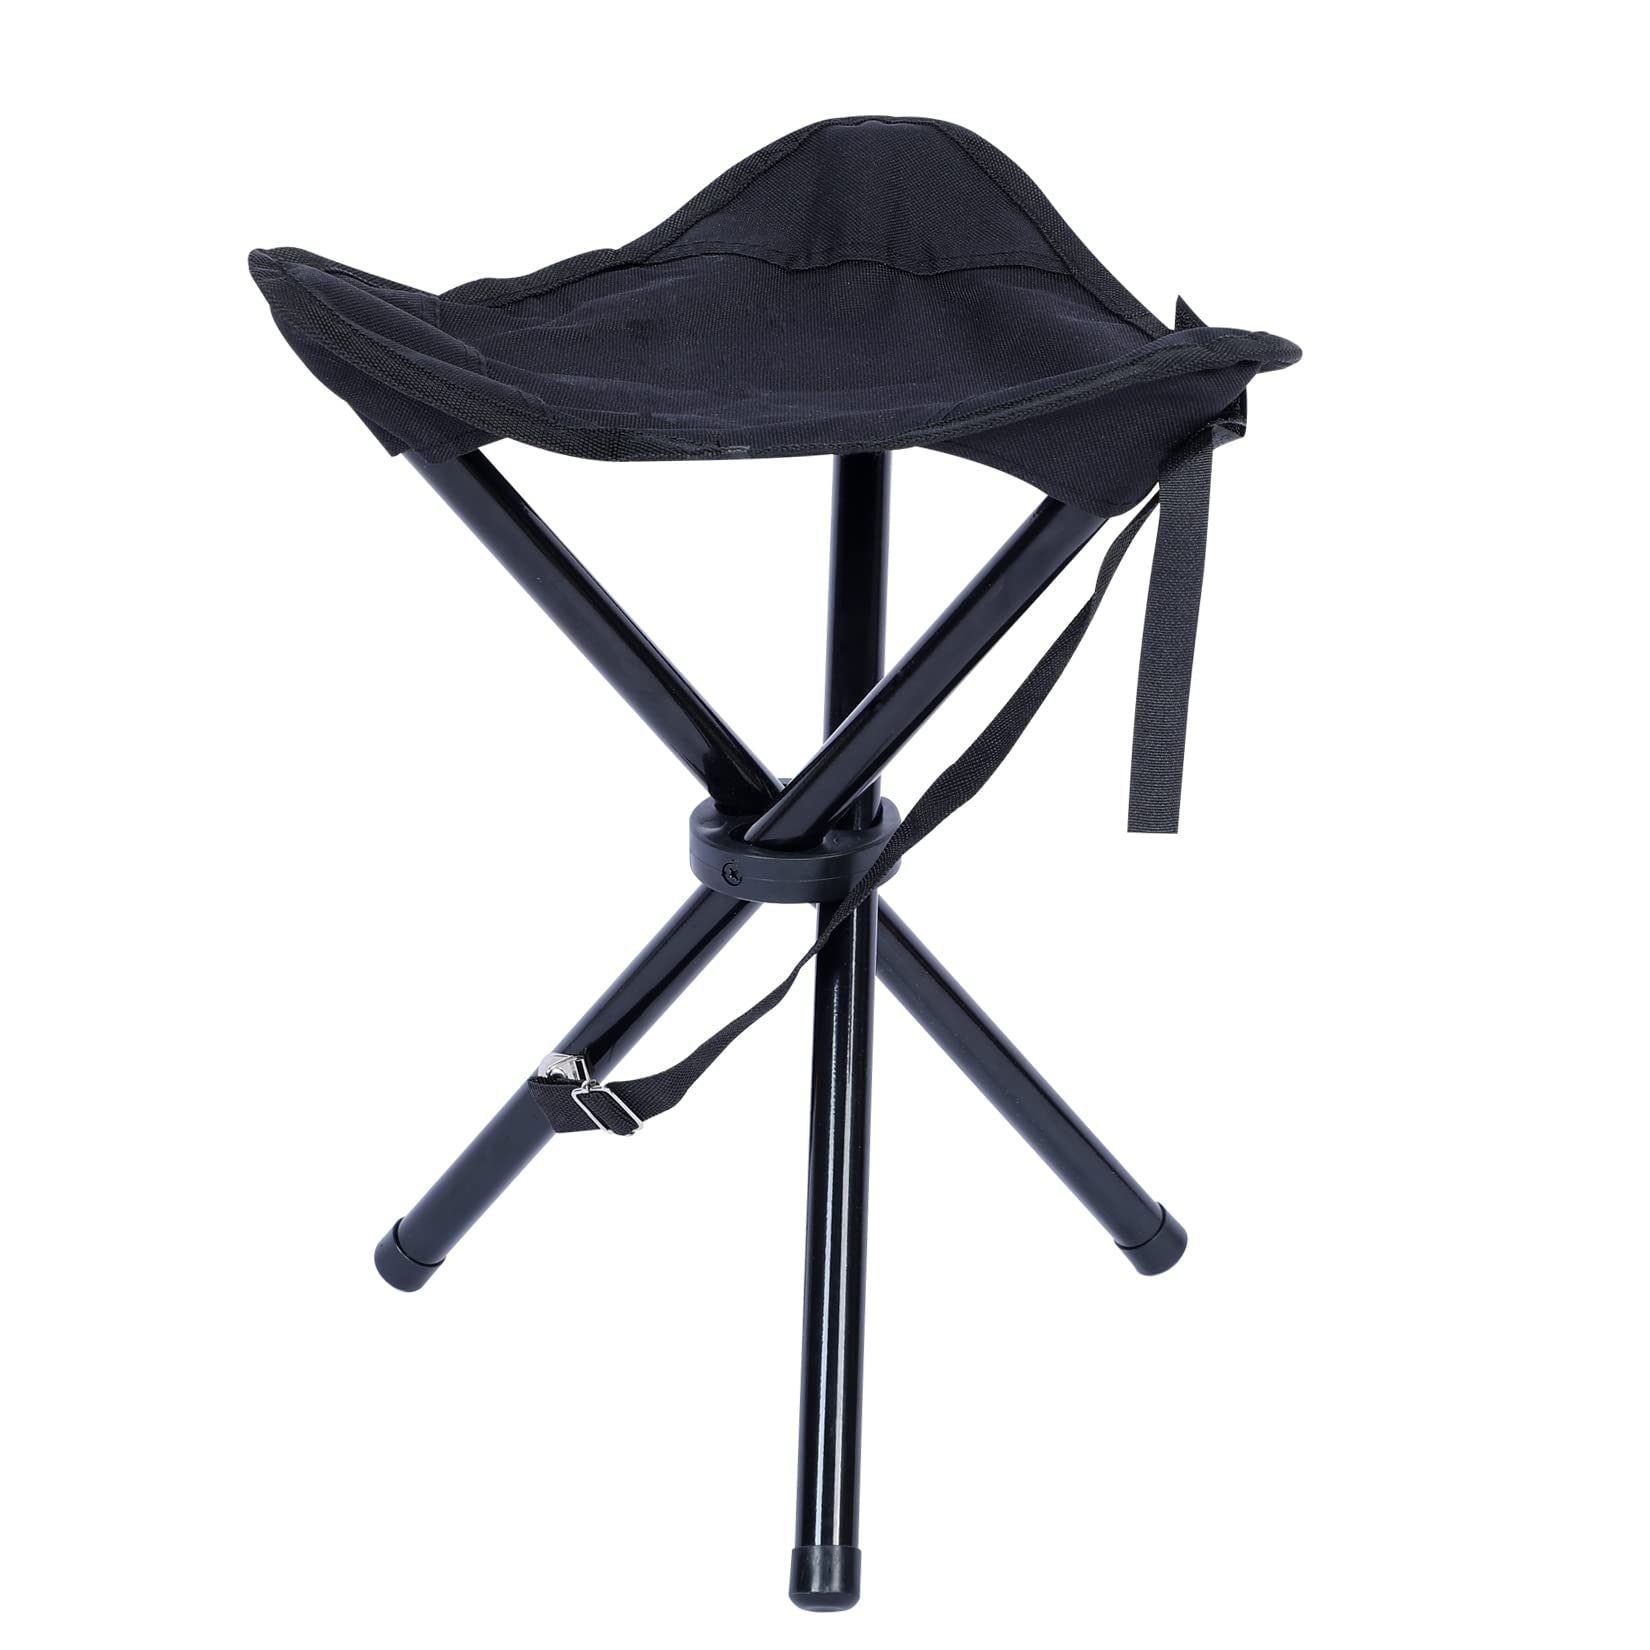 Folding Tripod Camping Stool—Tri-Leg Slacker Chair Super Compact for Outdoor Backpacking Fishing Picnic Travel Beach BBQ - Black